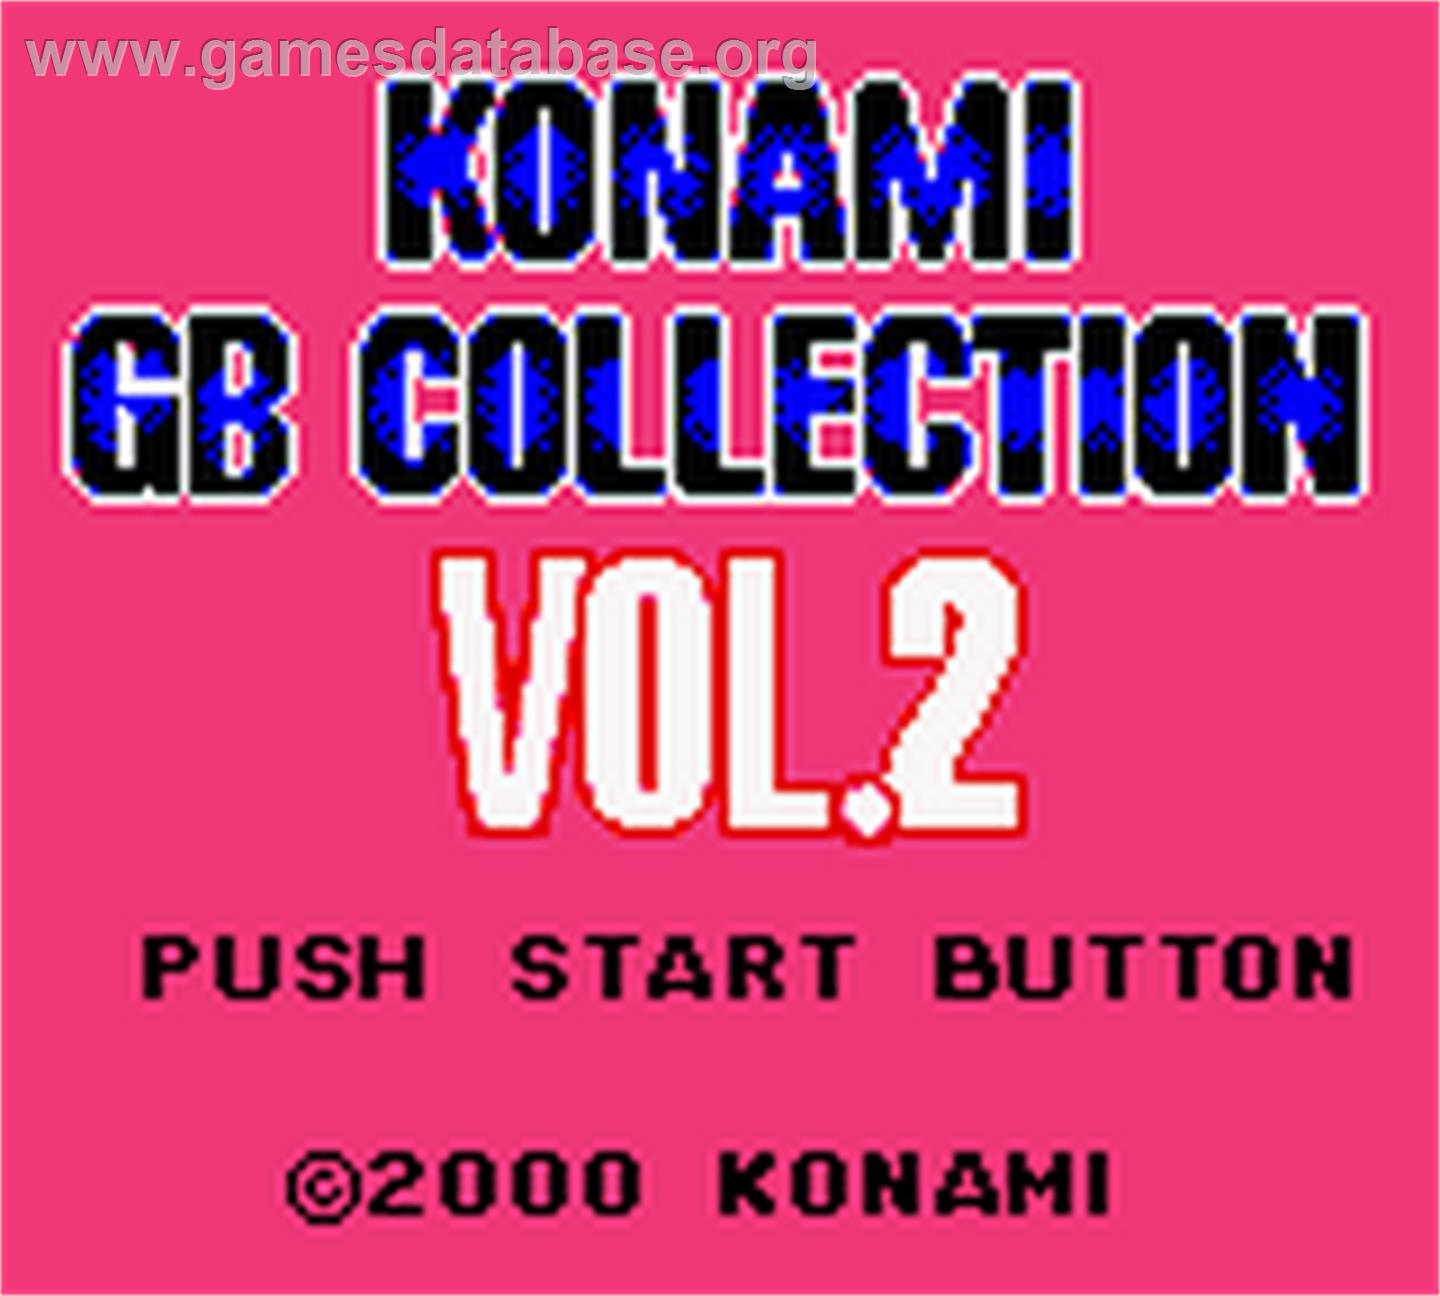 Konami GB Collection Vol. 2 - Nintendo Game Boy Color - Artwork - Title Screen